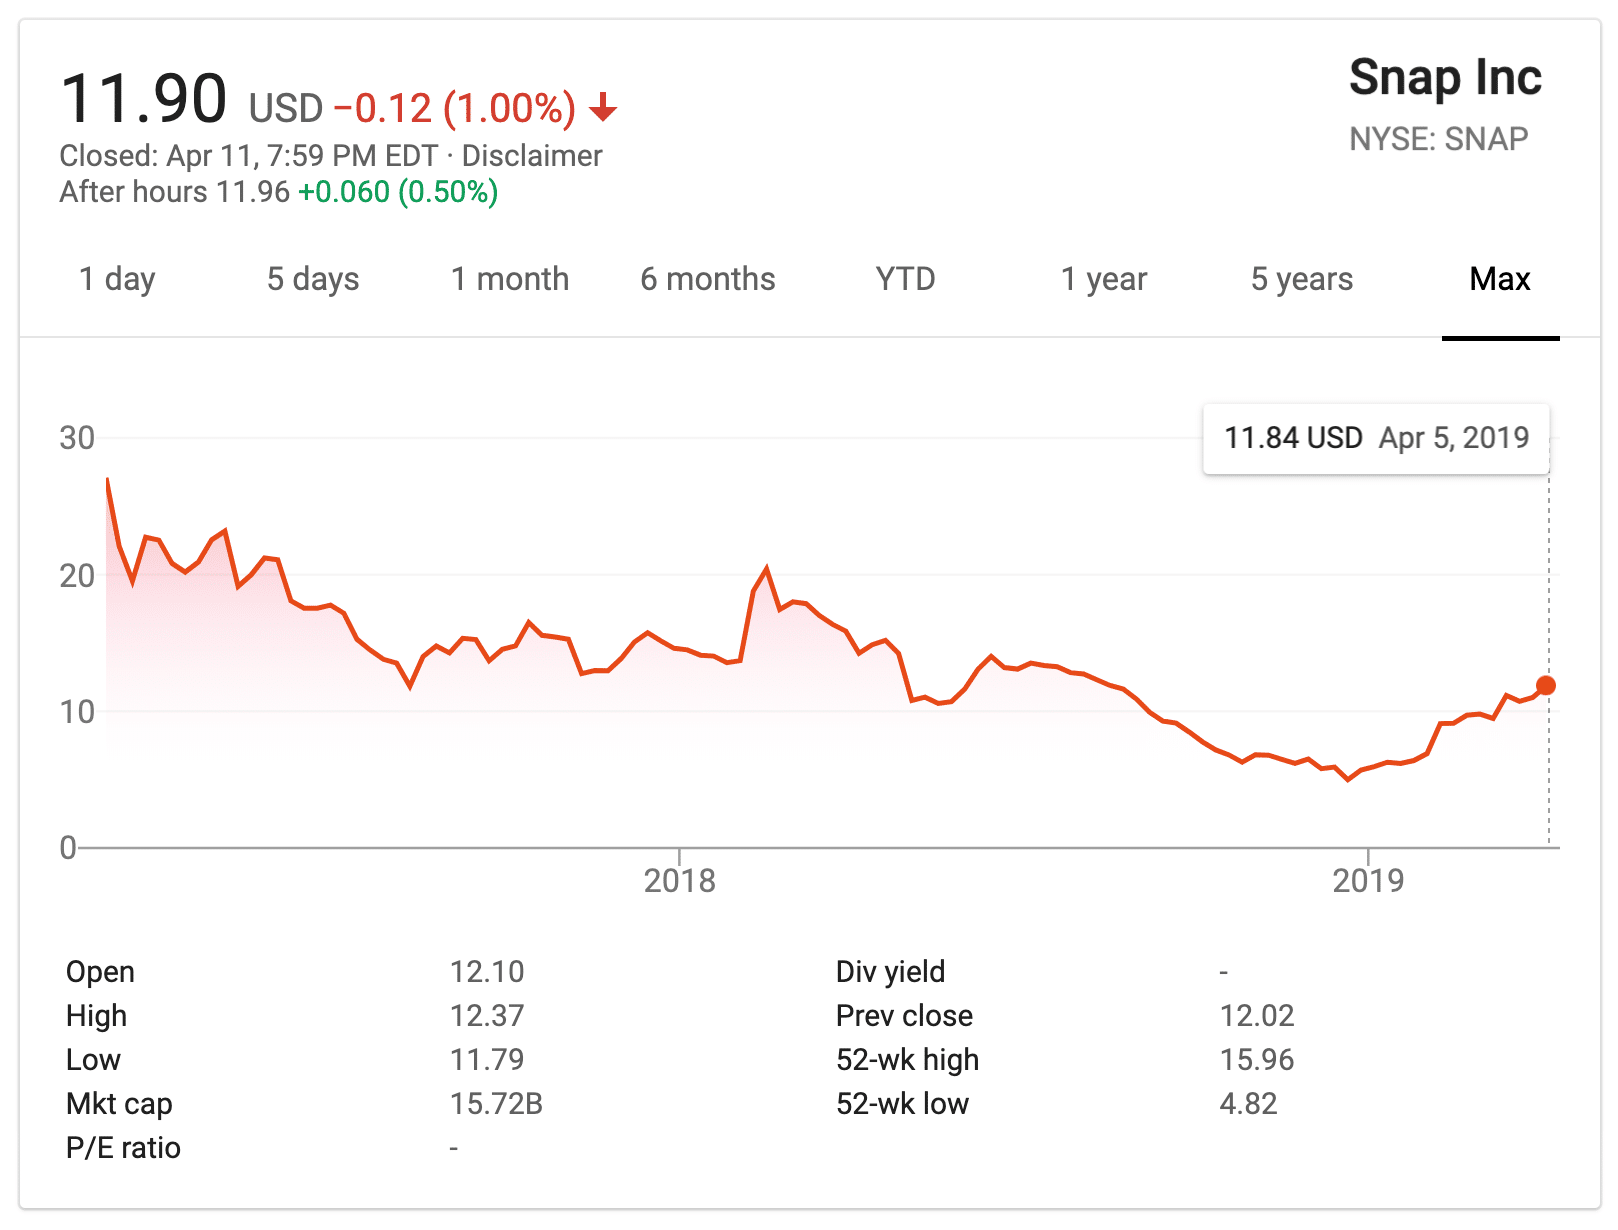 Snap Inc stocks